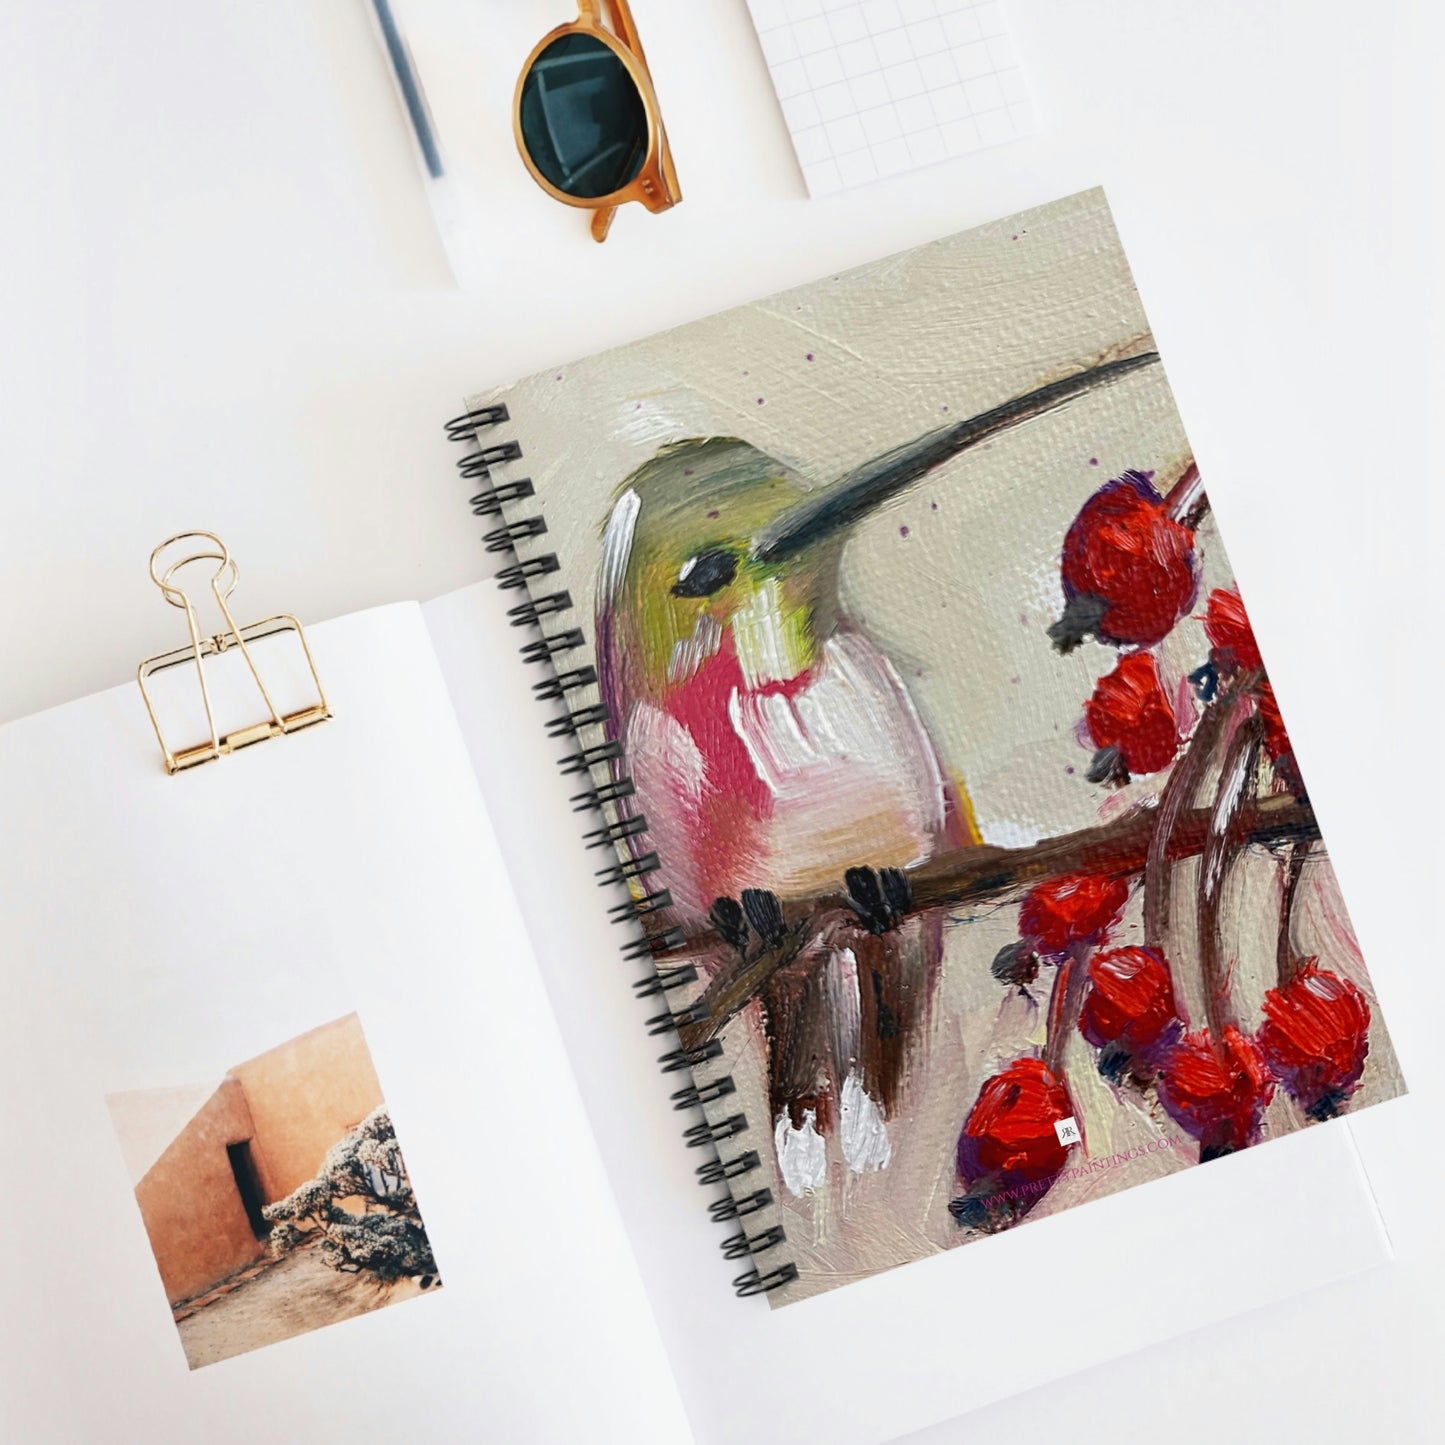 Hummingbird with Berries Spiral Notebook